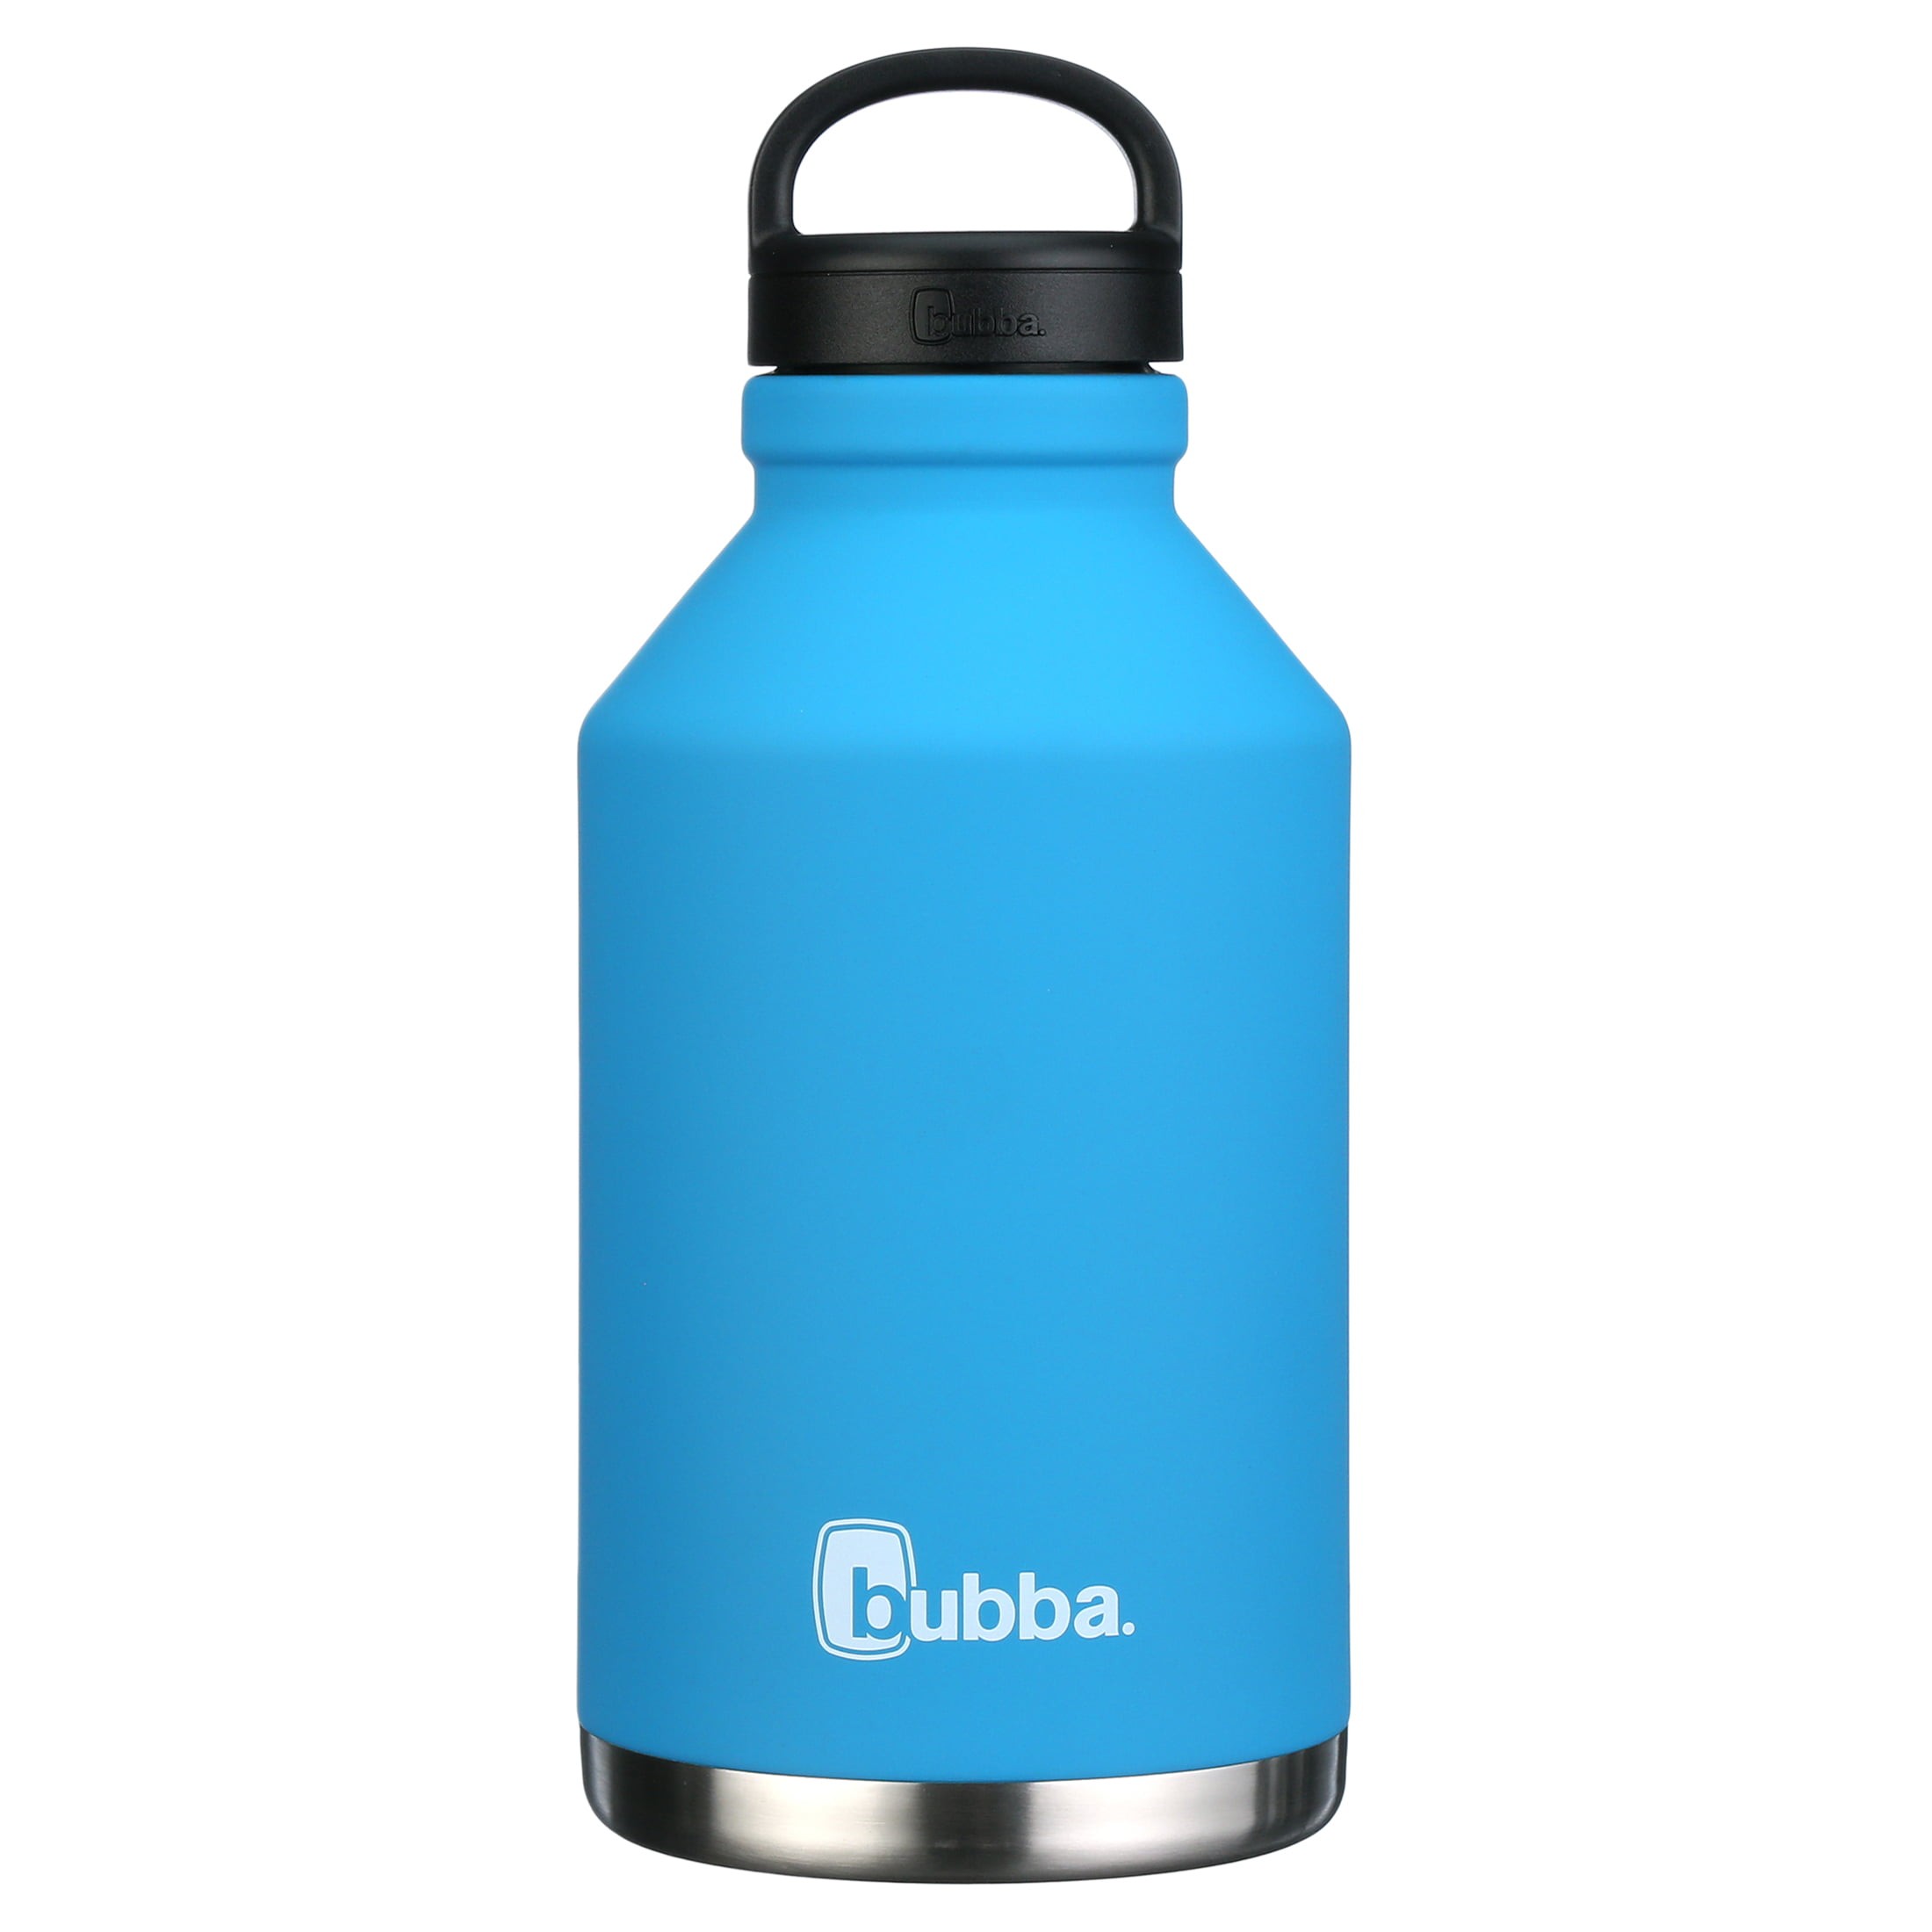 Bubba Flo Duo Refresh Double-Walled Water Bottle - 24 oz